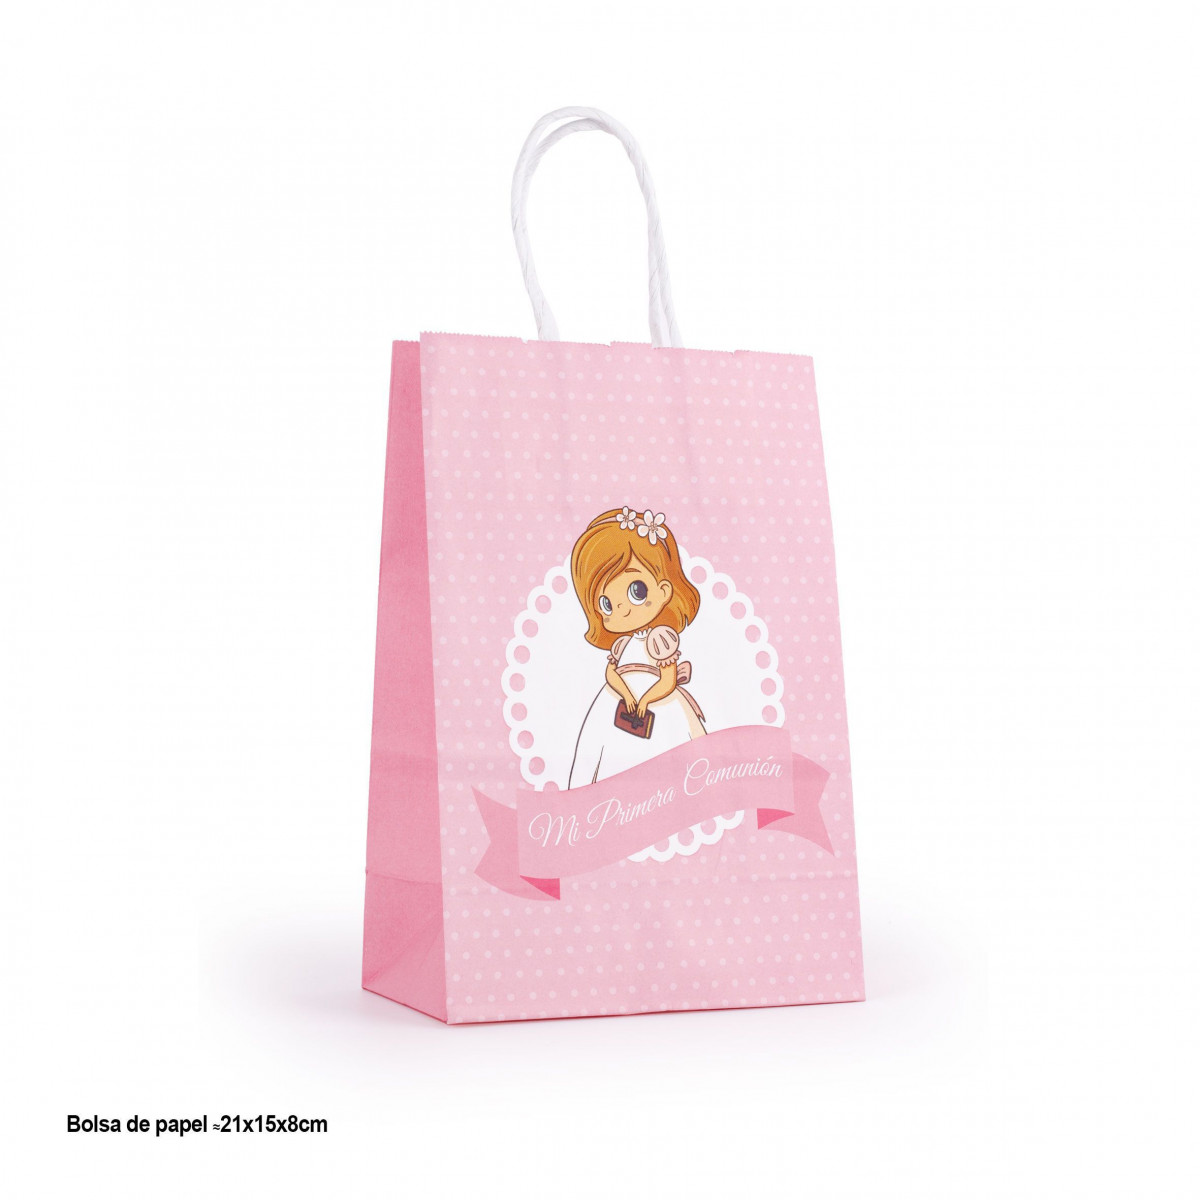 Bolsa de papel para primera comunión en rosa